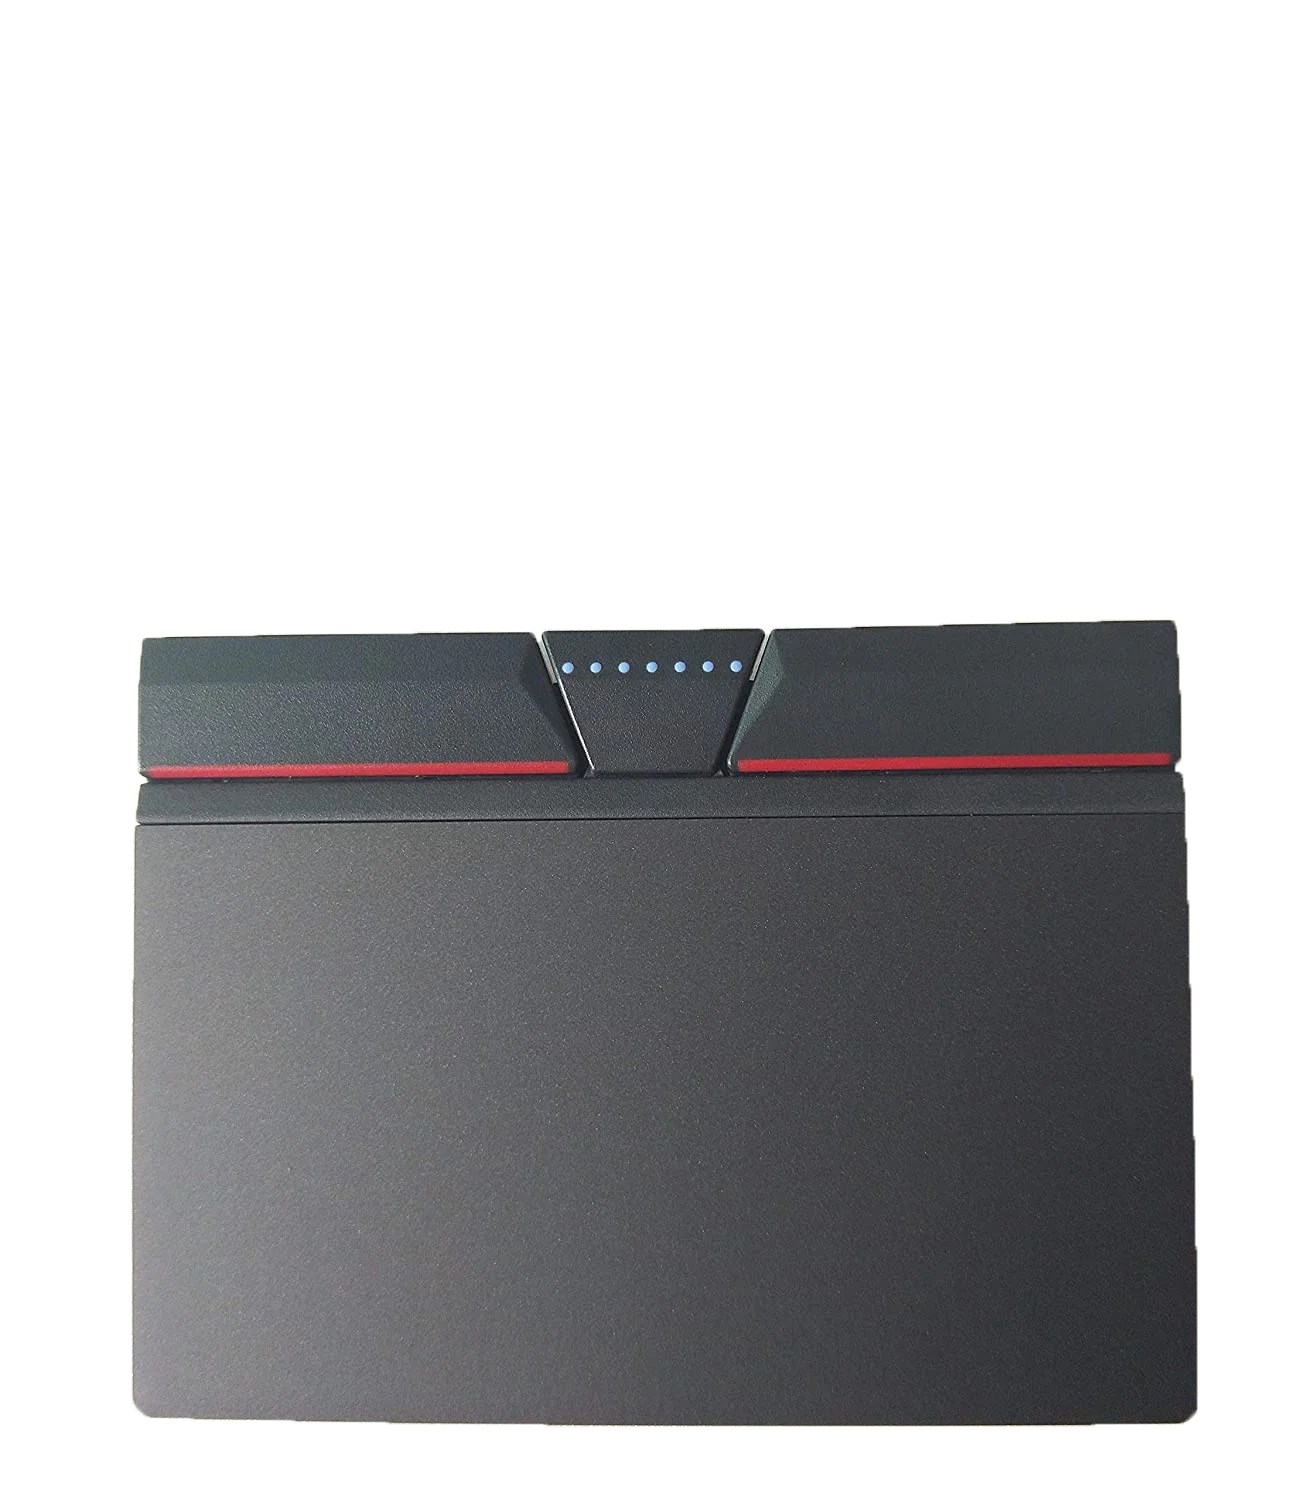 Tri Tipke Dodirne pločice Clickpad Trackpad za Lenovo Thinkpad T440 T440S T440P T450 T450S T450P T540P W540 W541 W550S T550 Slika 0